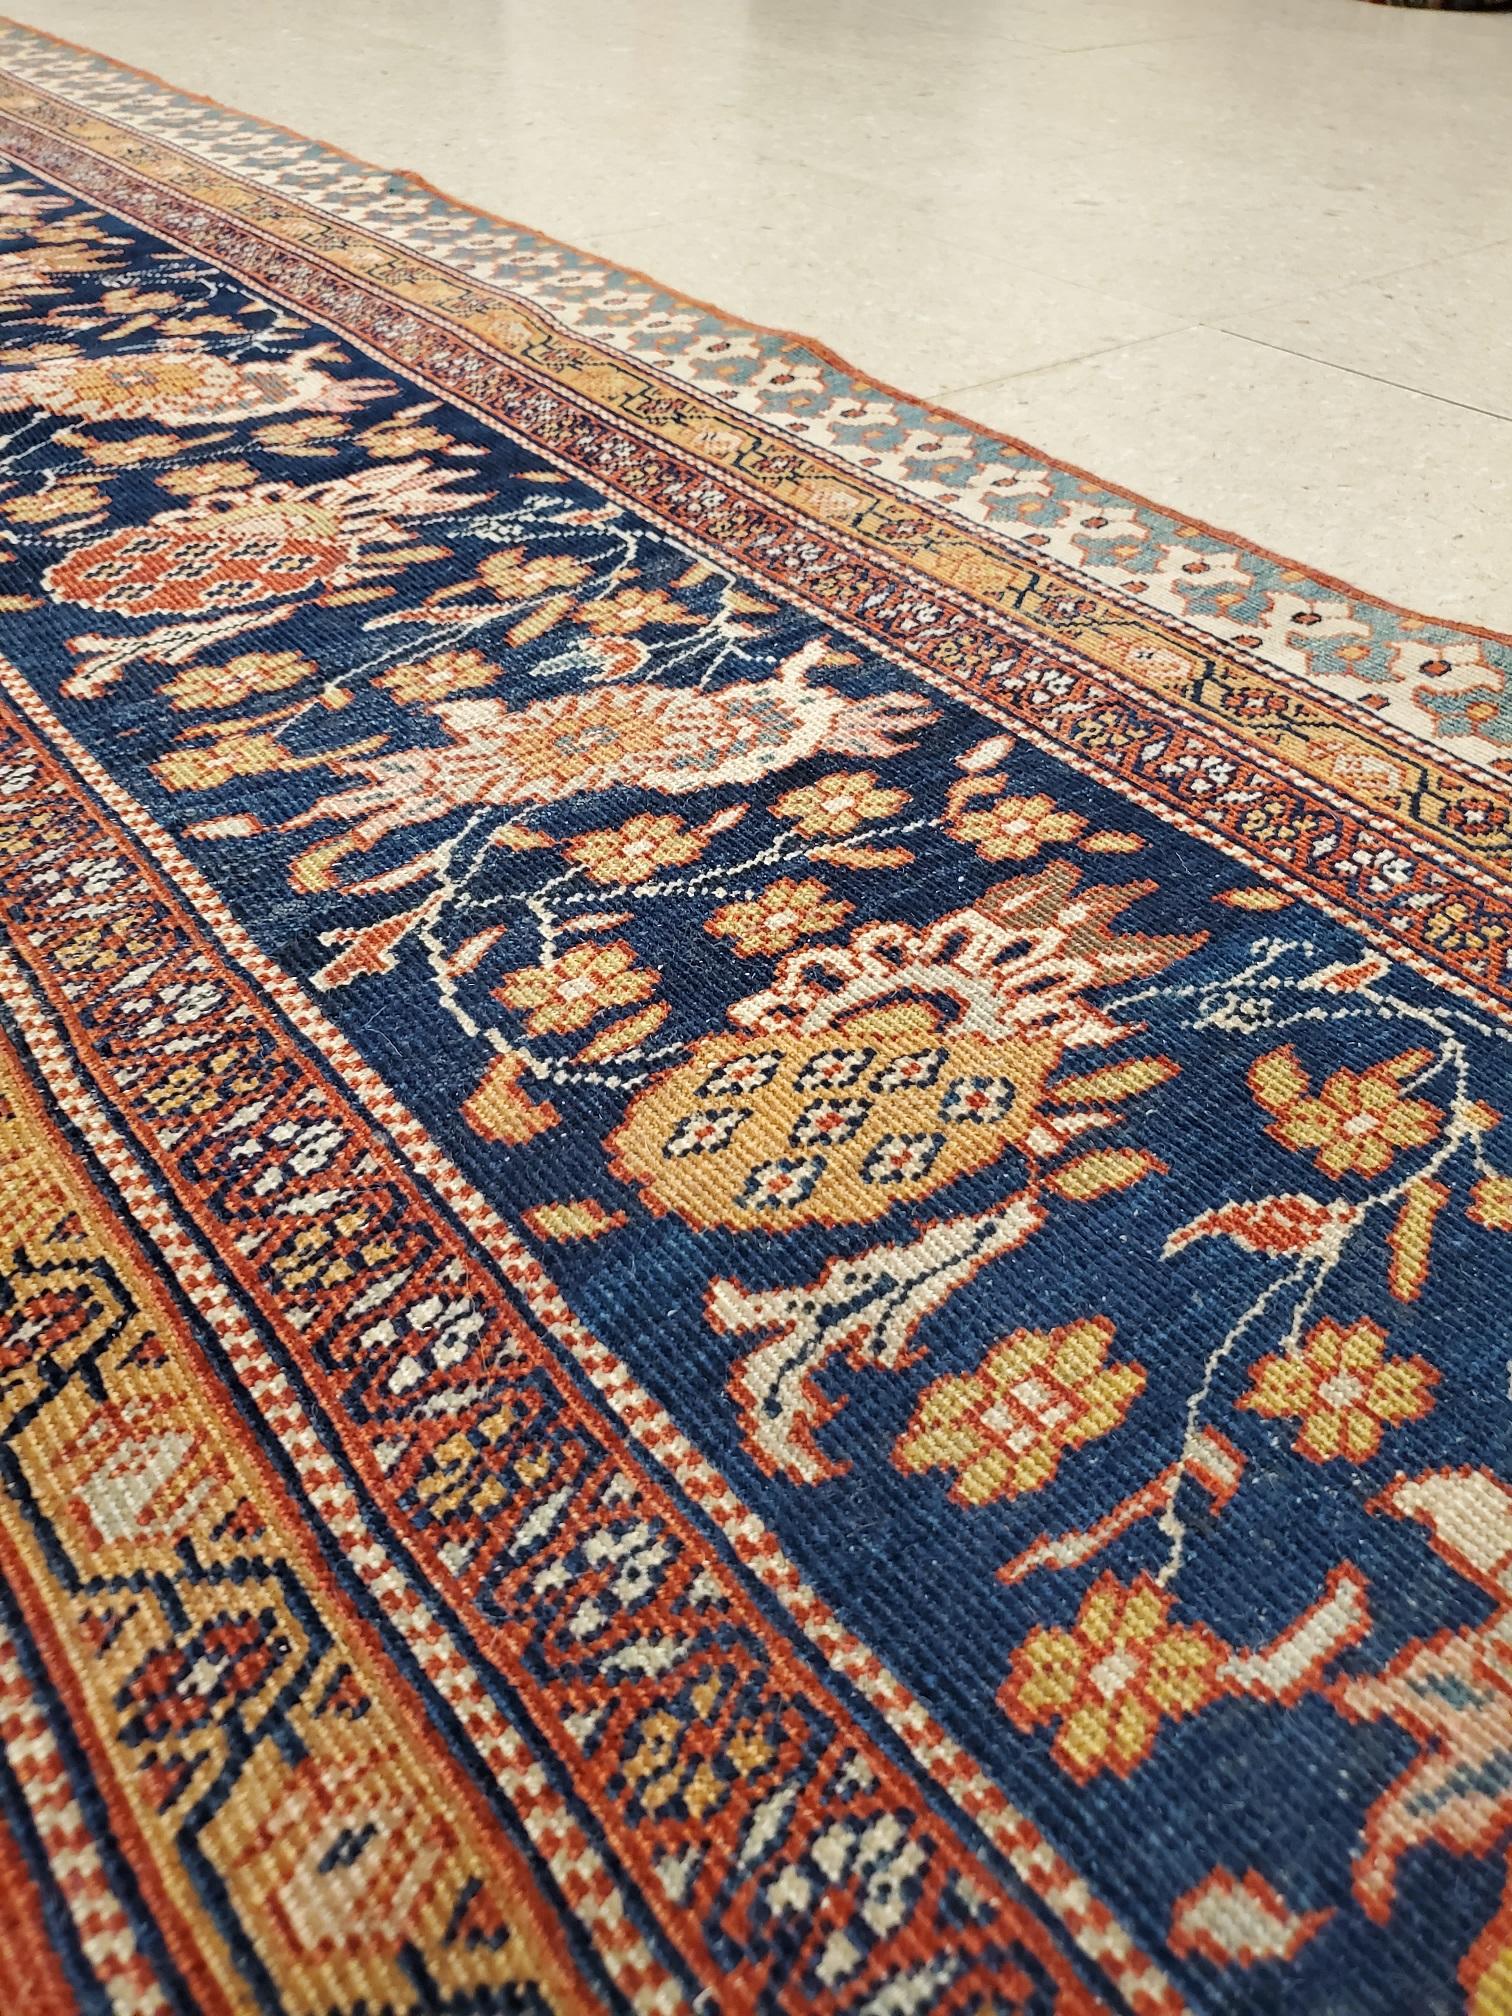 Antique Farahan Sarouk Carpet, Handmade Oriental Rug, Ivory, Red, Navy, Fine  For Sale 1